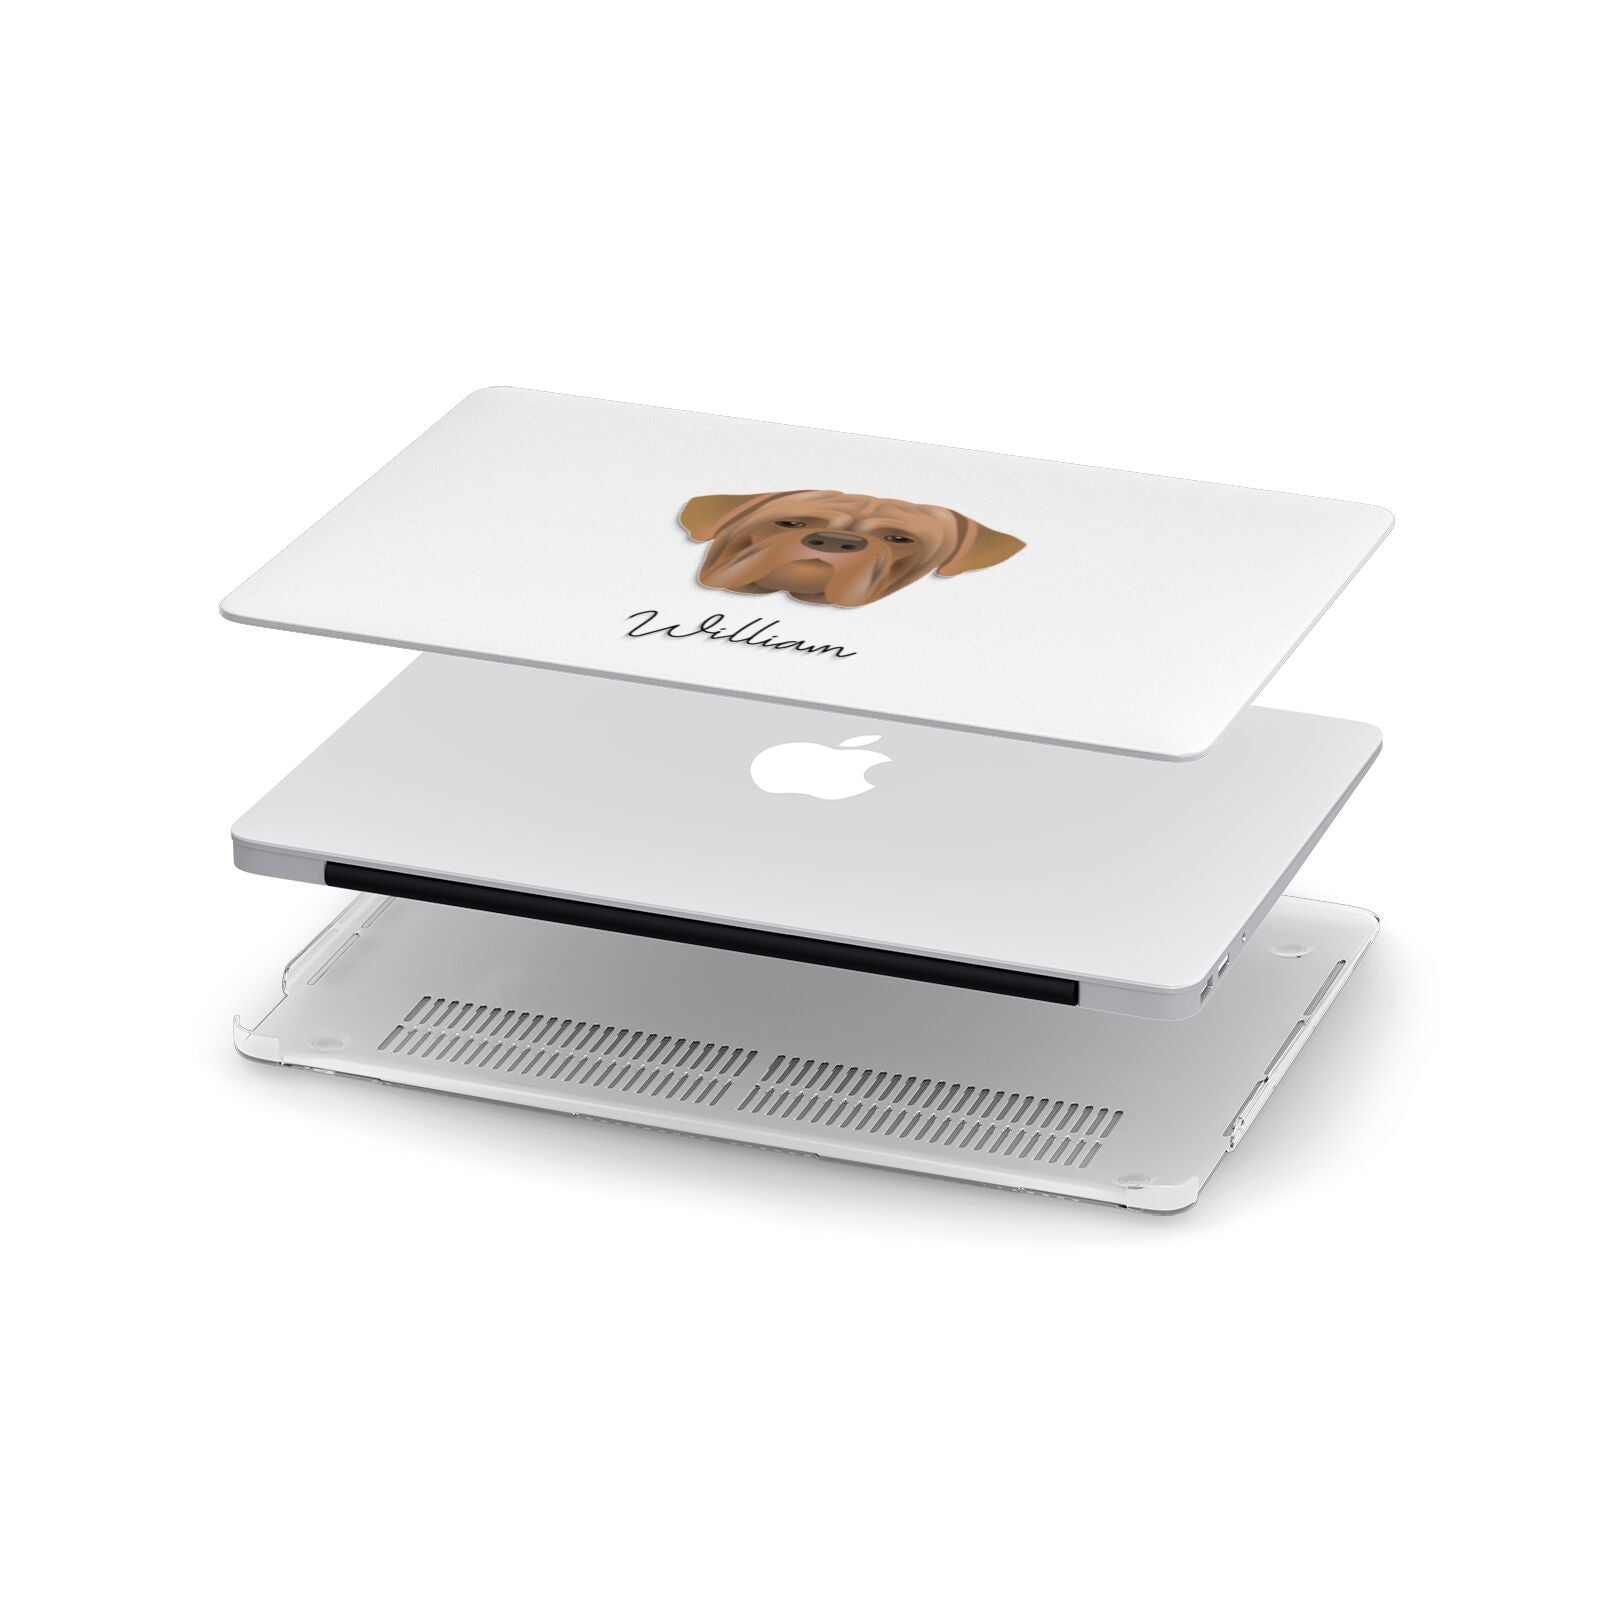 Dogue de Bordeaux Personalised Apple MacBook Case in Detail